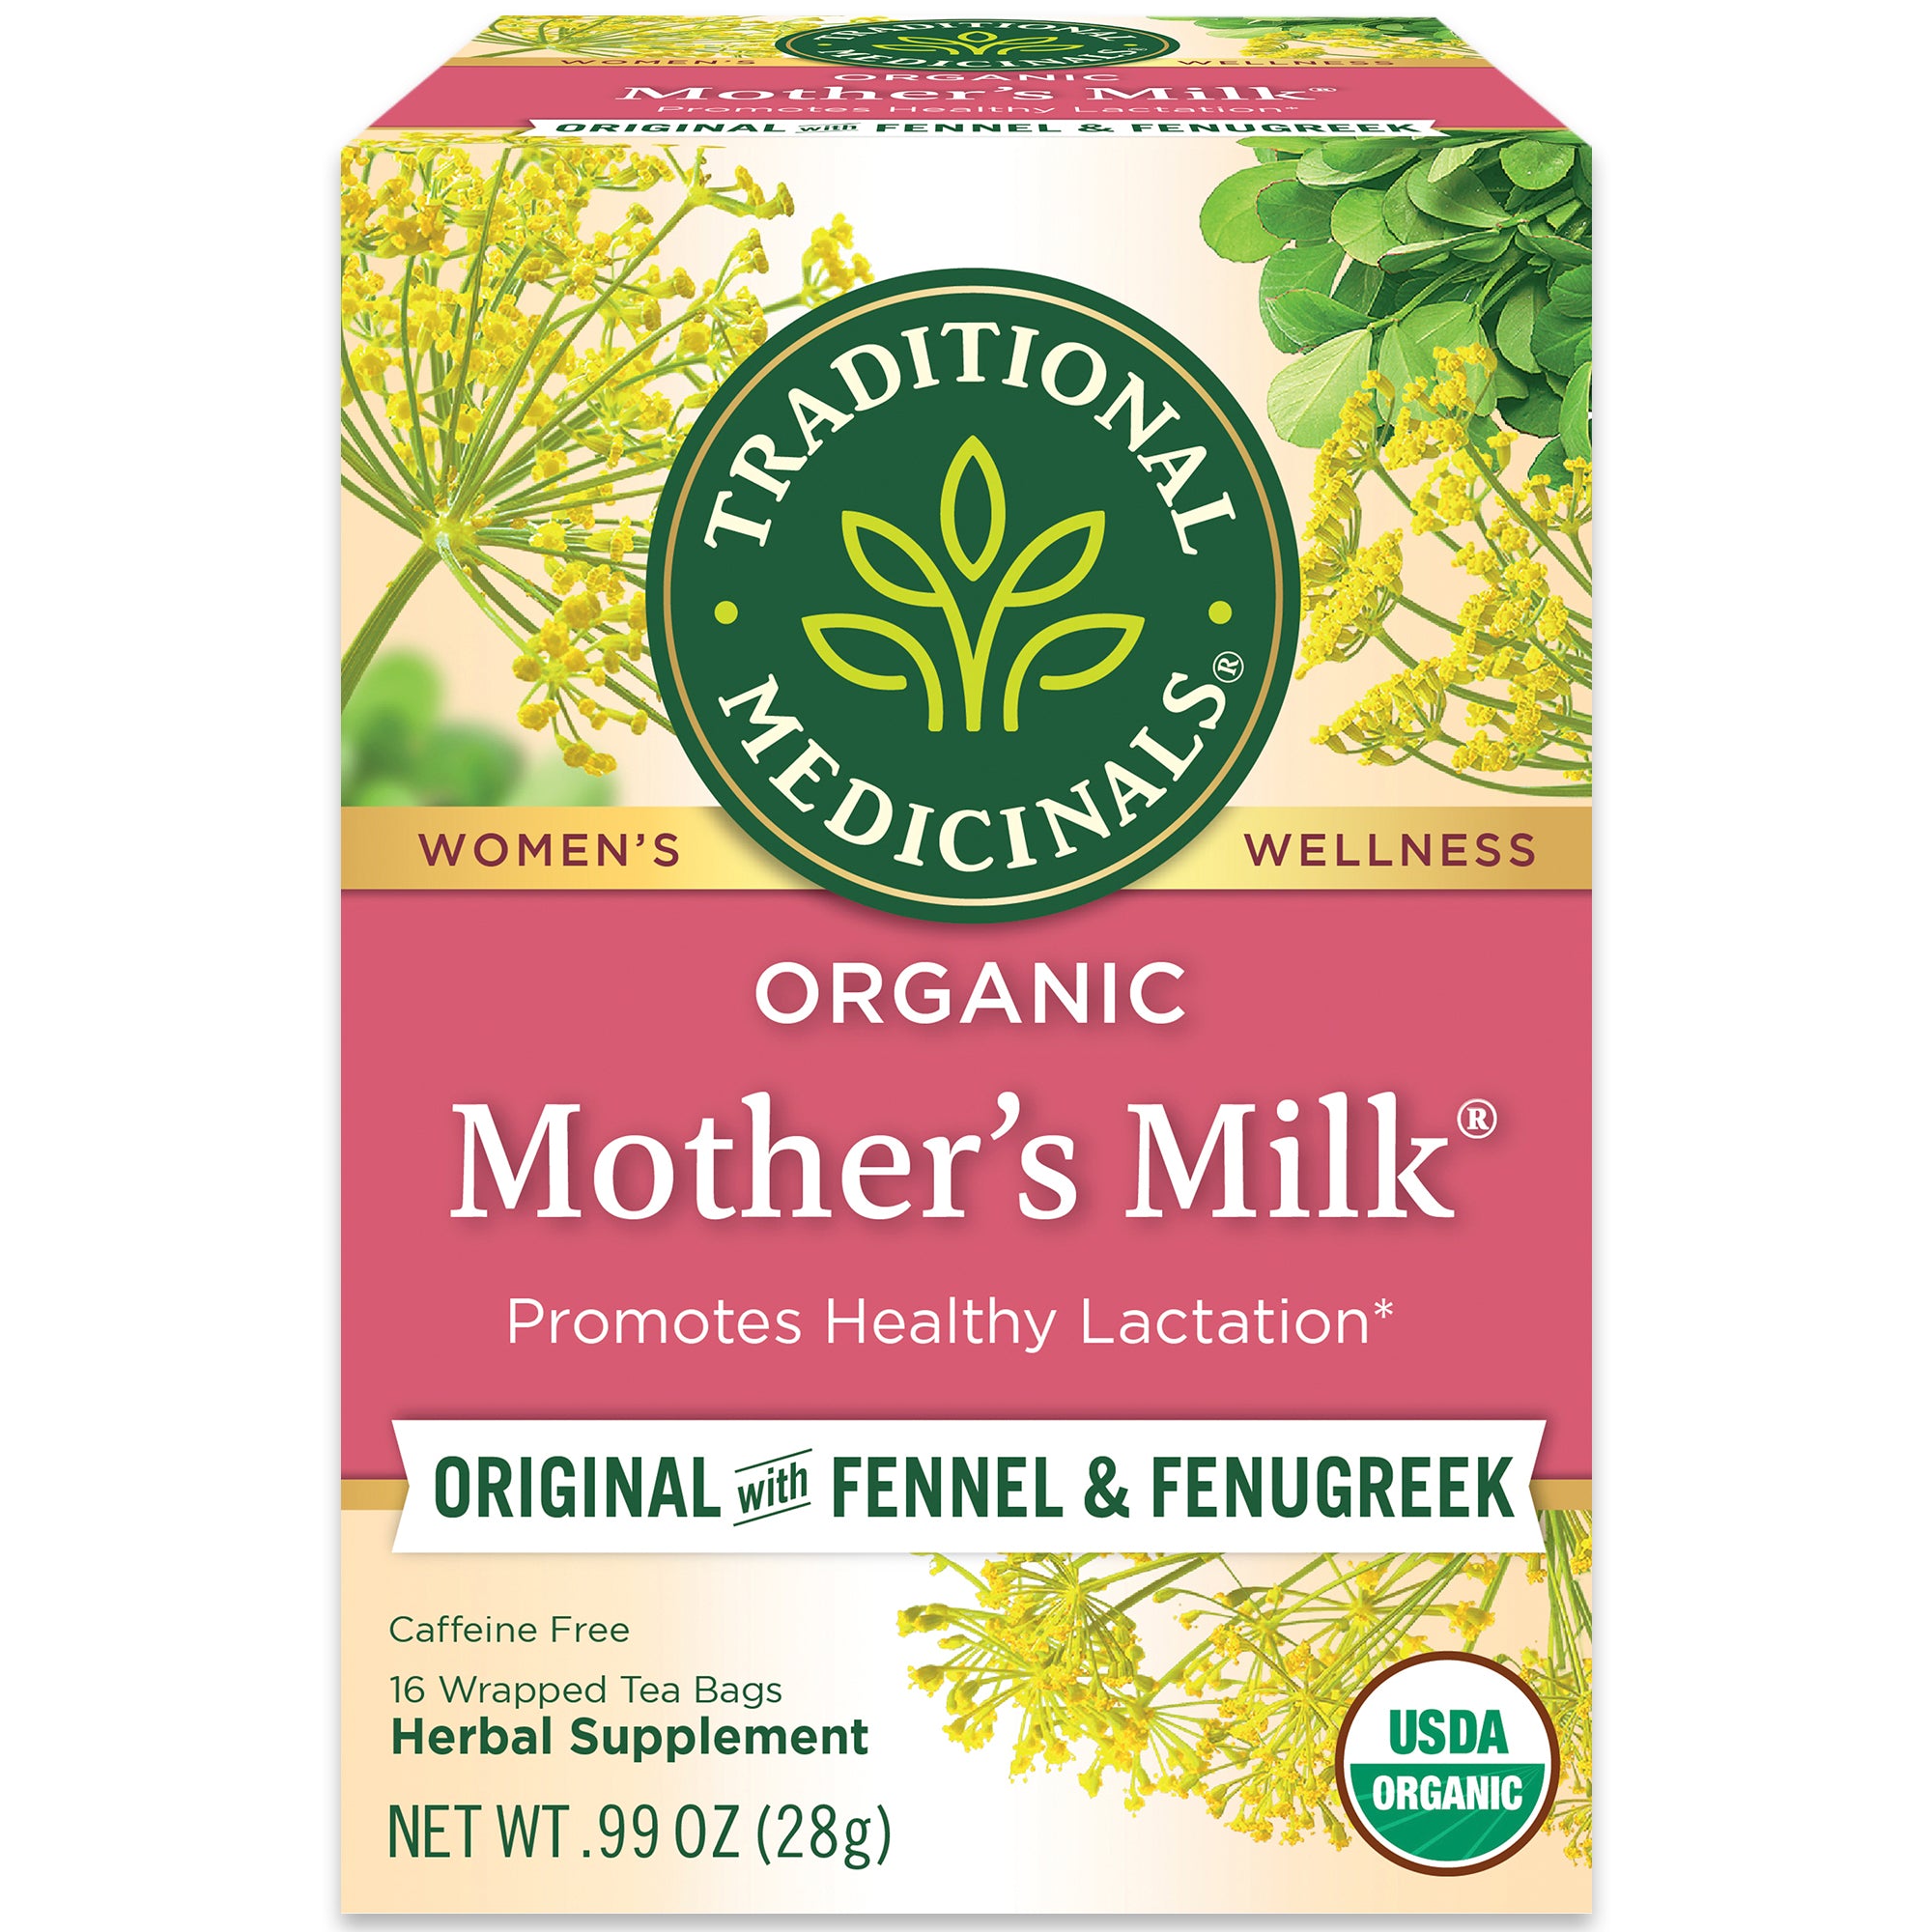 Joy Milk Tea,  Product Reviews